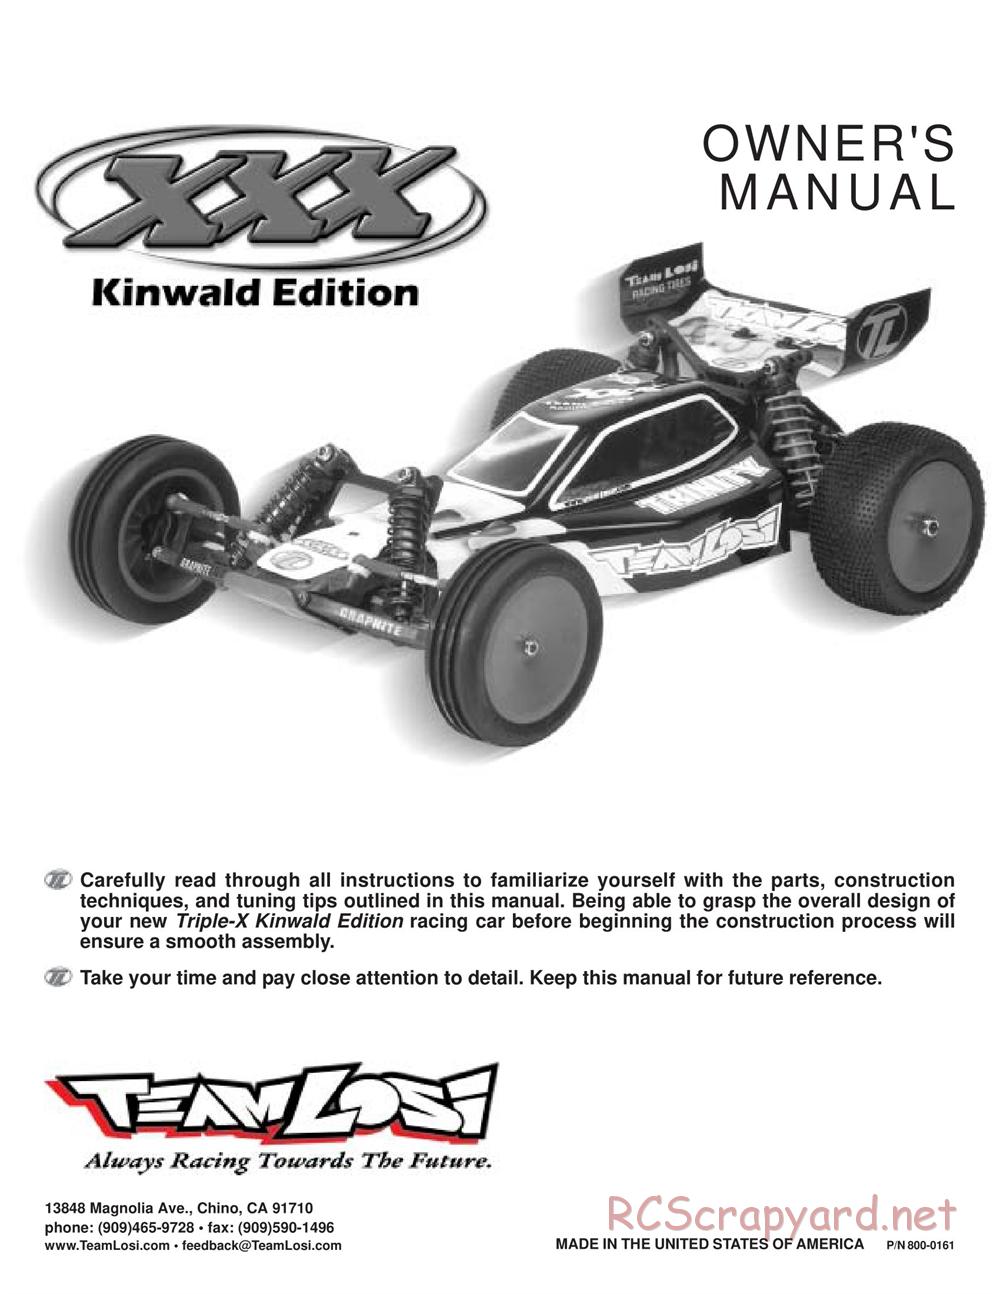 Team Losi - XXX BK (BK1) - Kinwald Edition - Manual - Page 1